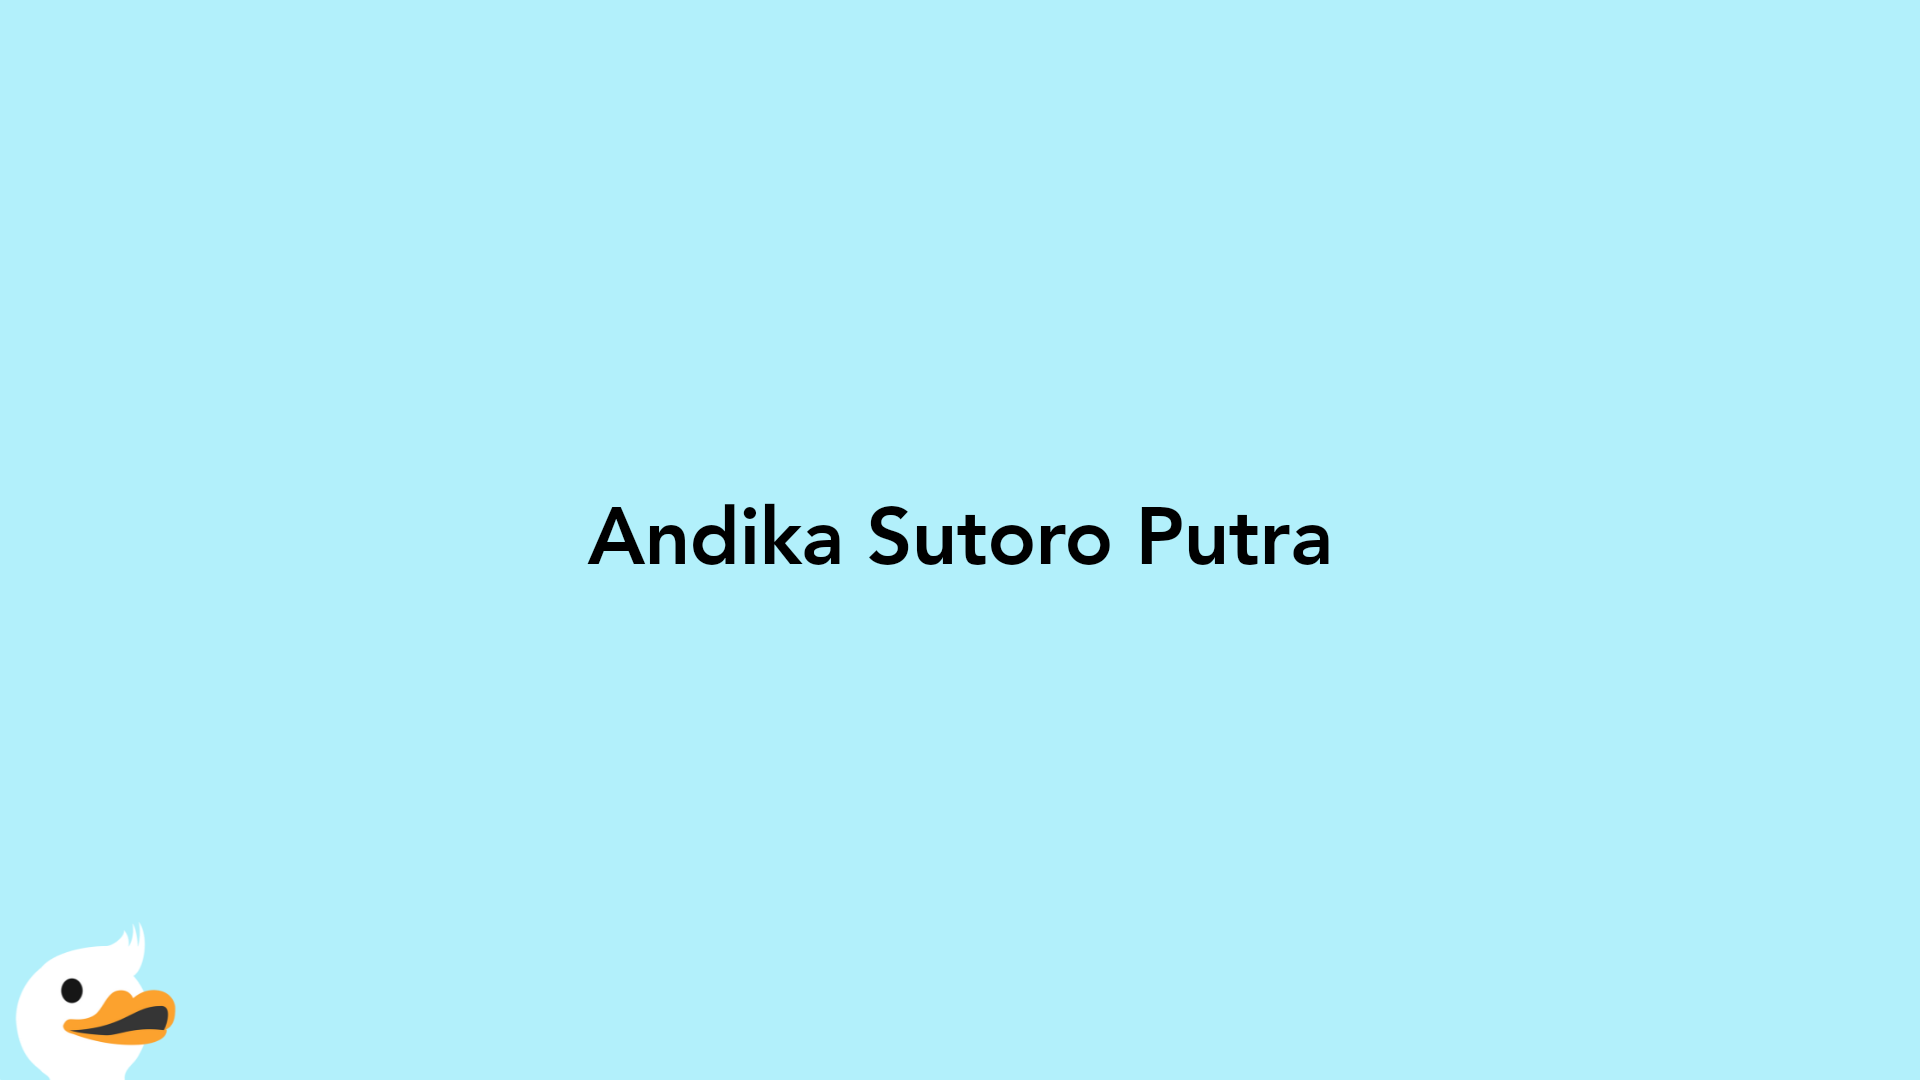 Andika Sutoro Putra